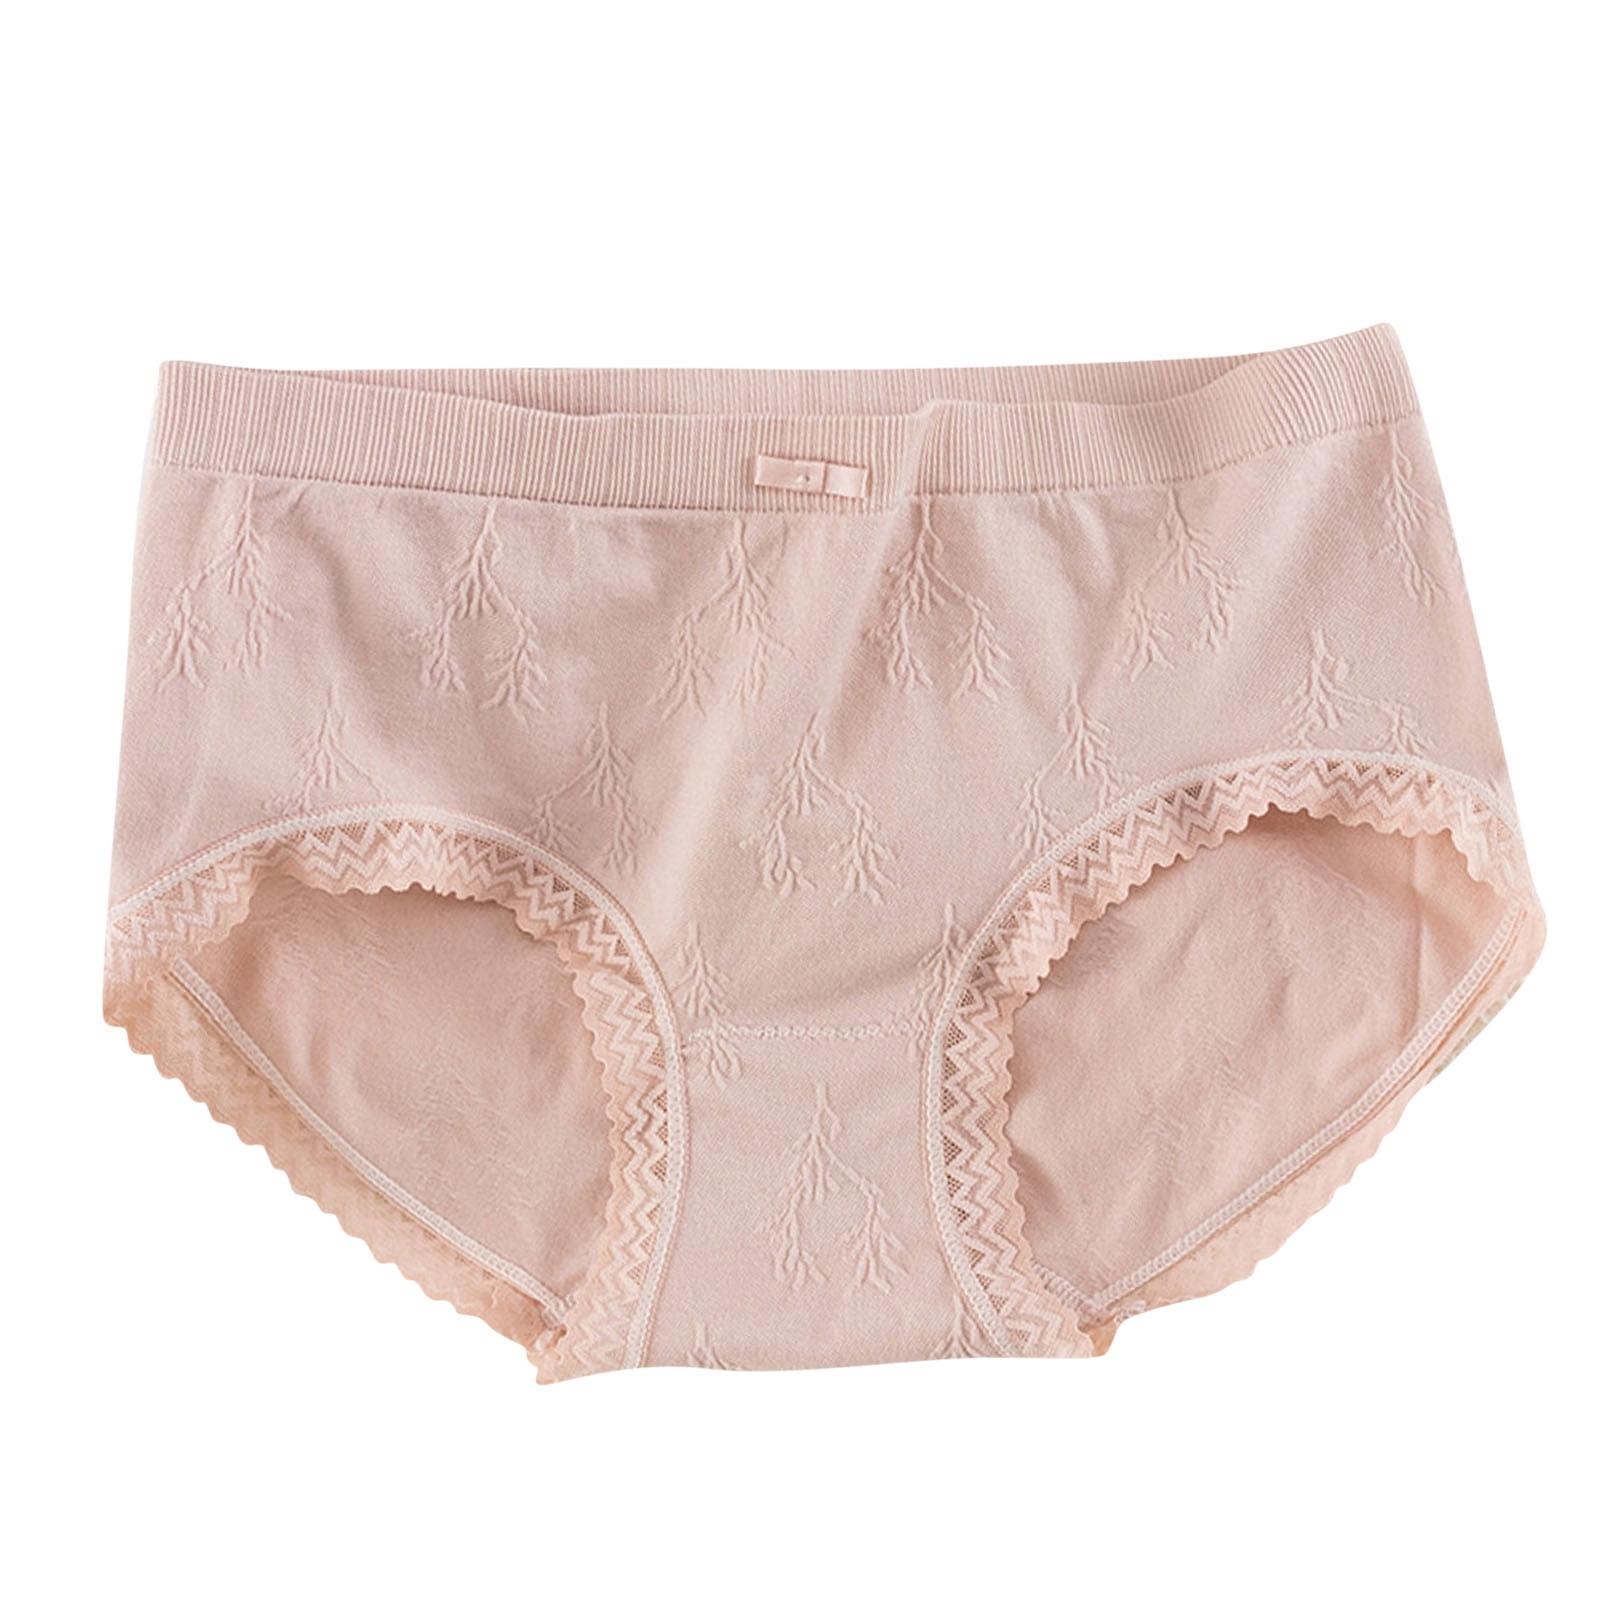 XNN Women's Underwear Ladies Soft Full Briefs Panties Plus Size 4